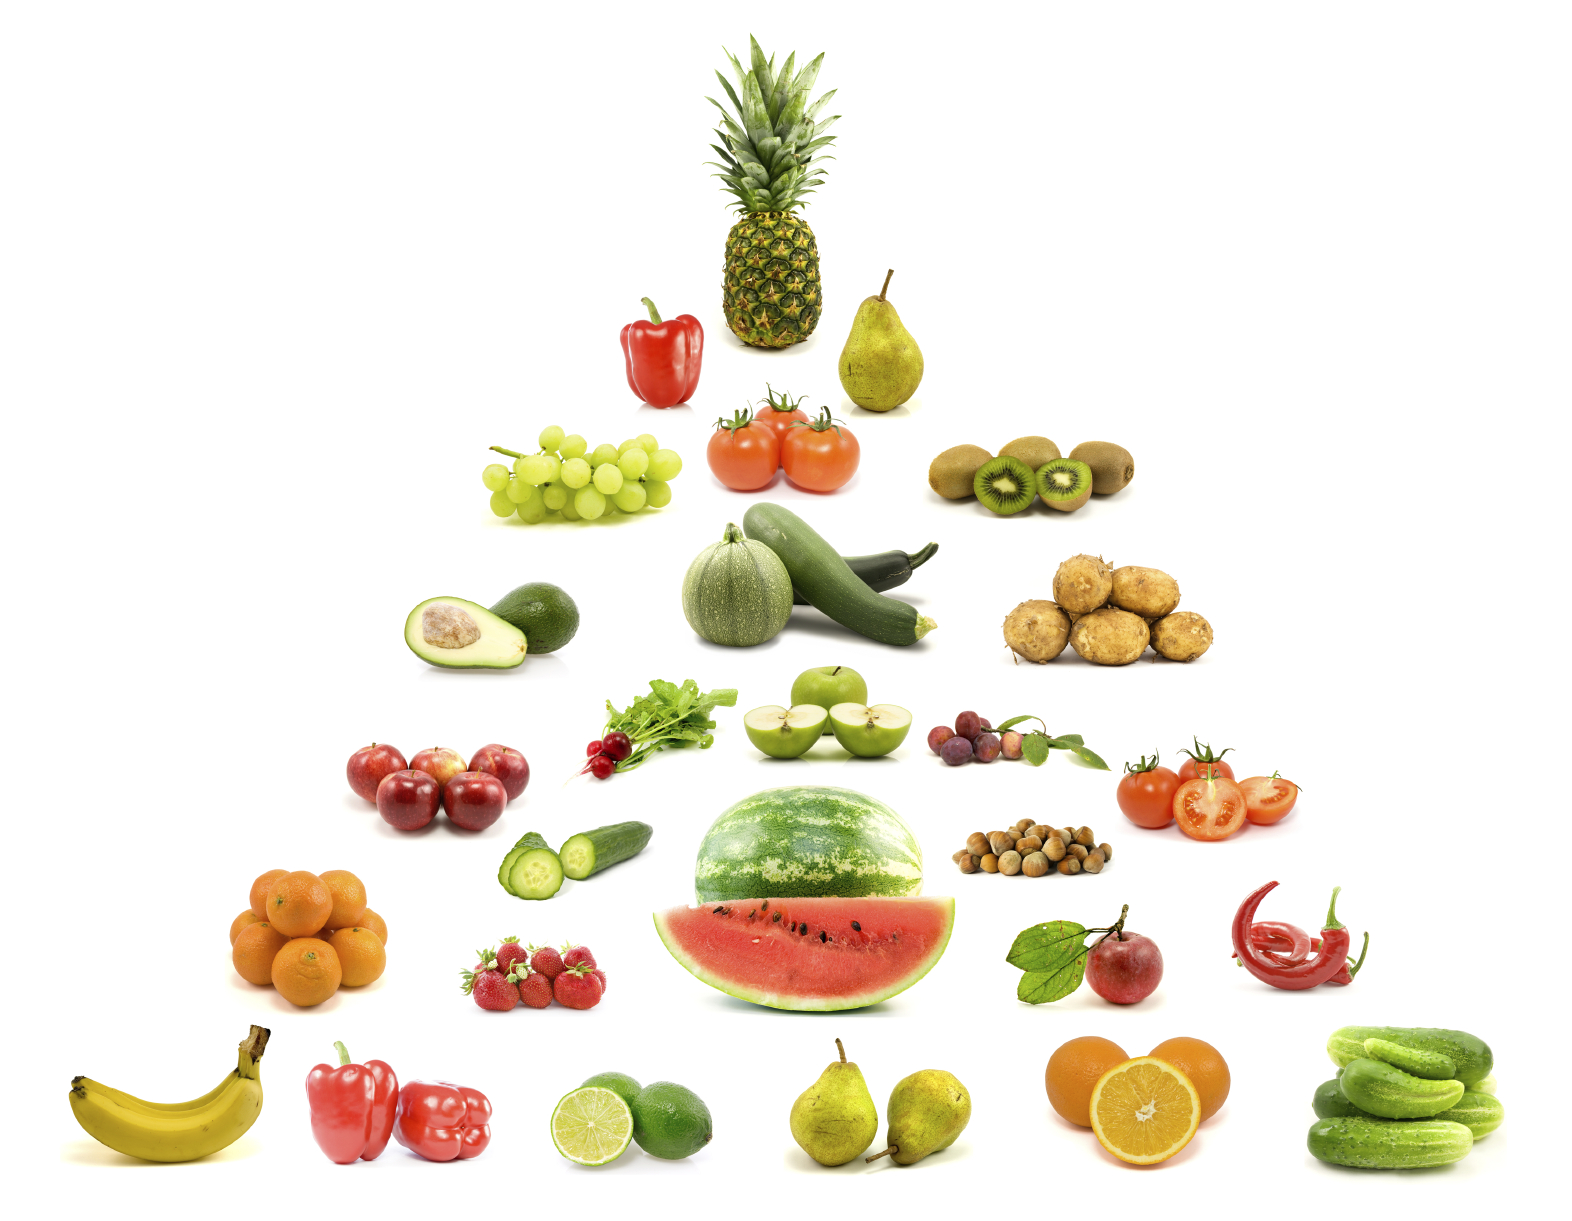 Fruit and veg pyramid